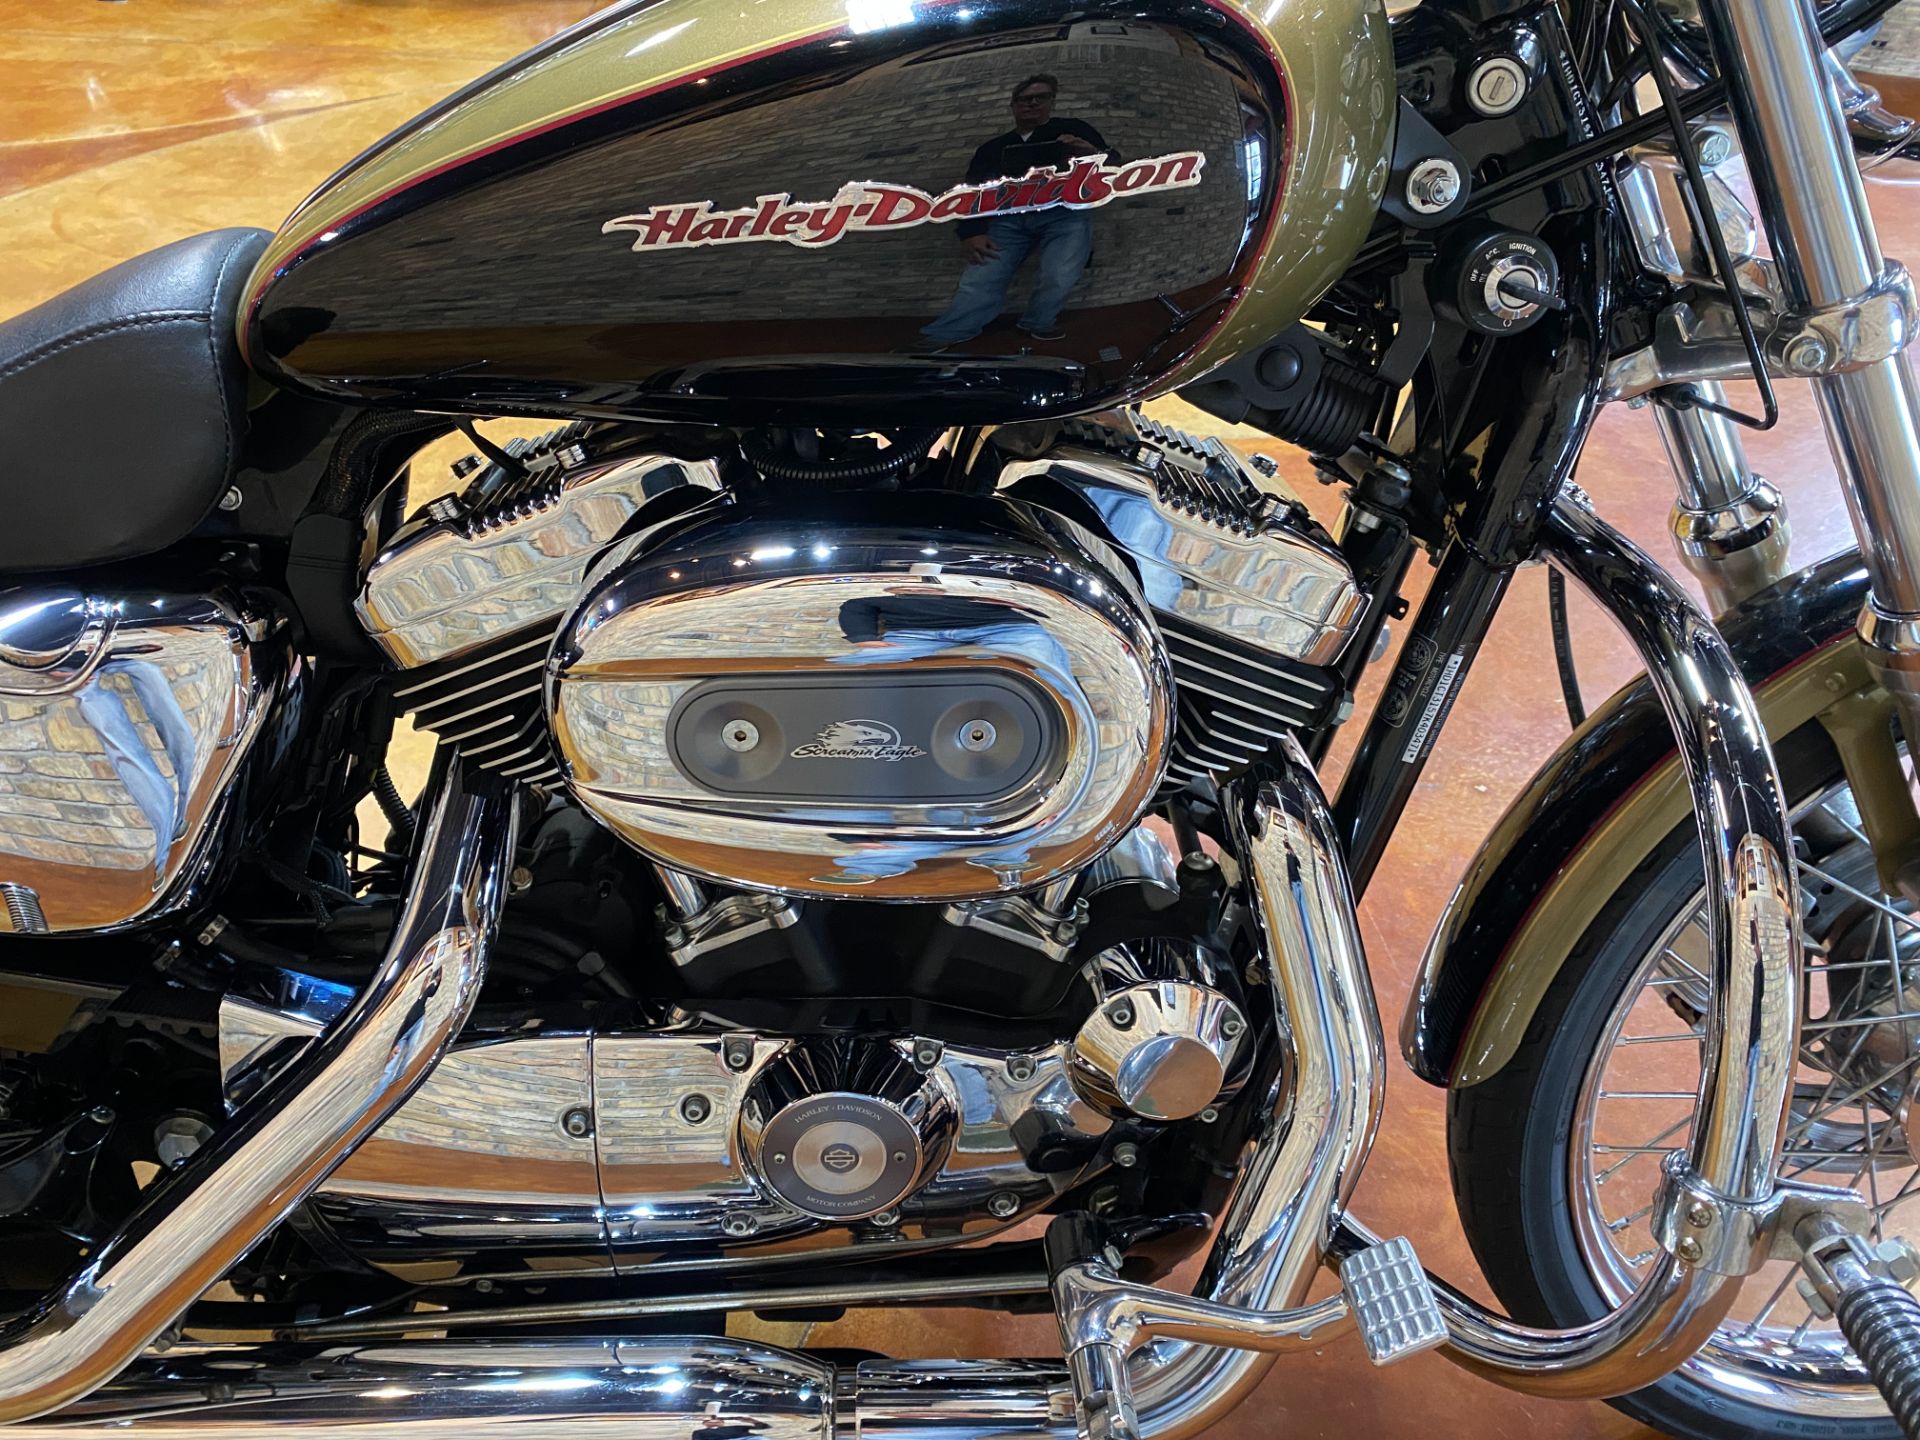 2007 Harley-Davidson Sportster® 1200 Custom in Big Bend, Wisconsin - Photo 9